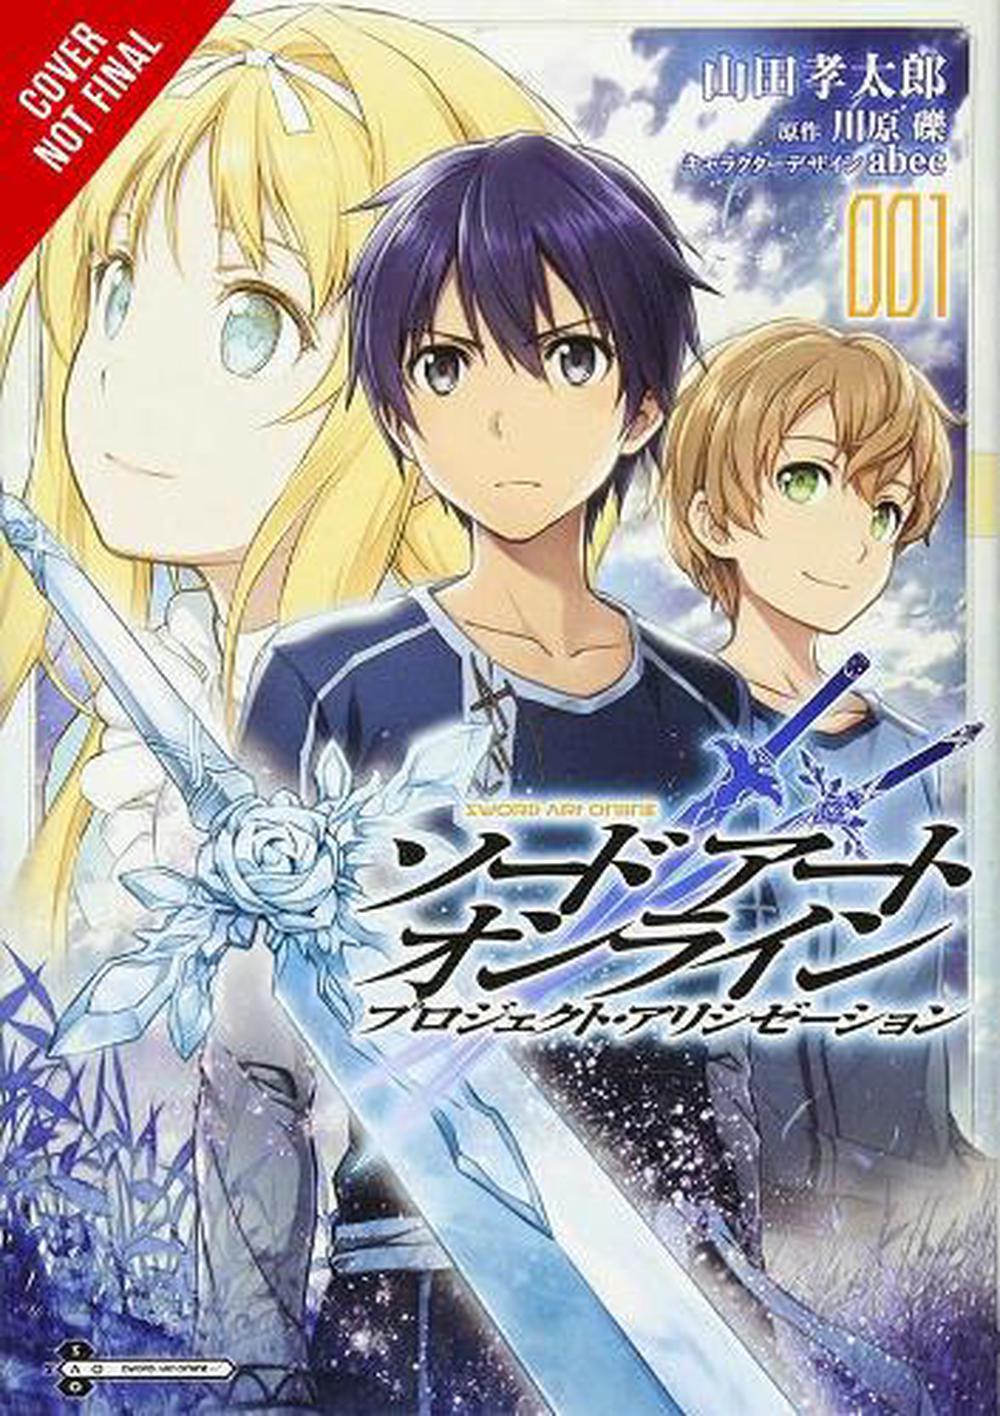 Sword Art Online Project Alicization, Vol. 1 (manga) by